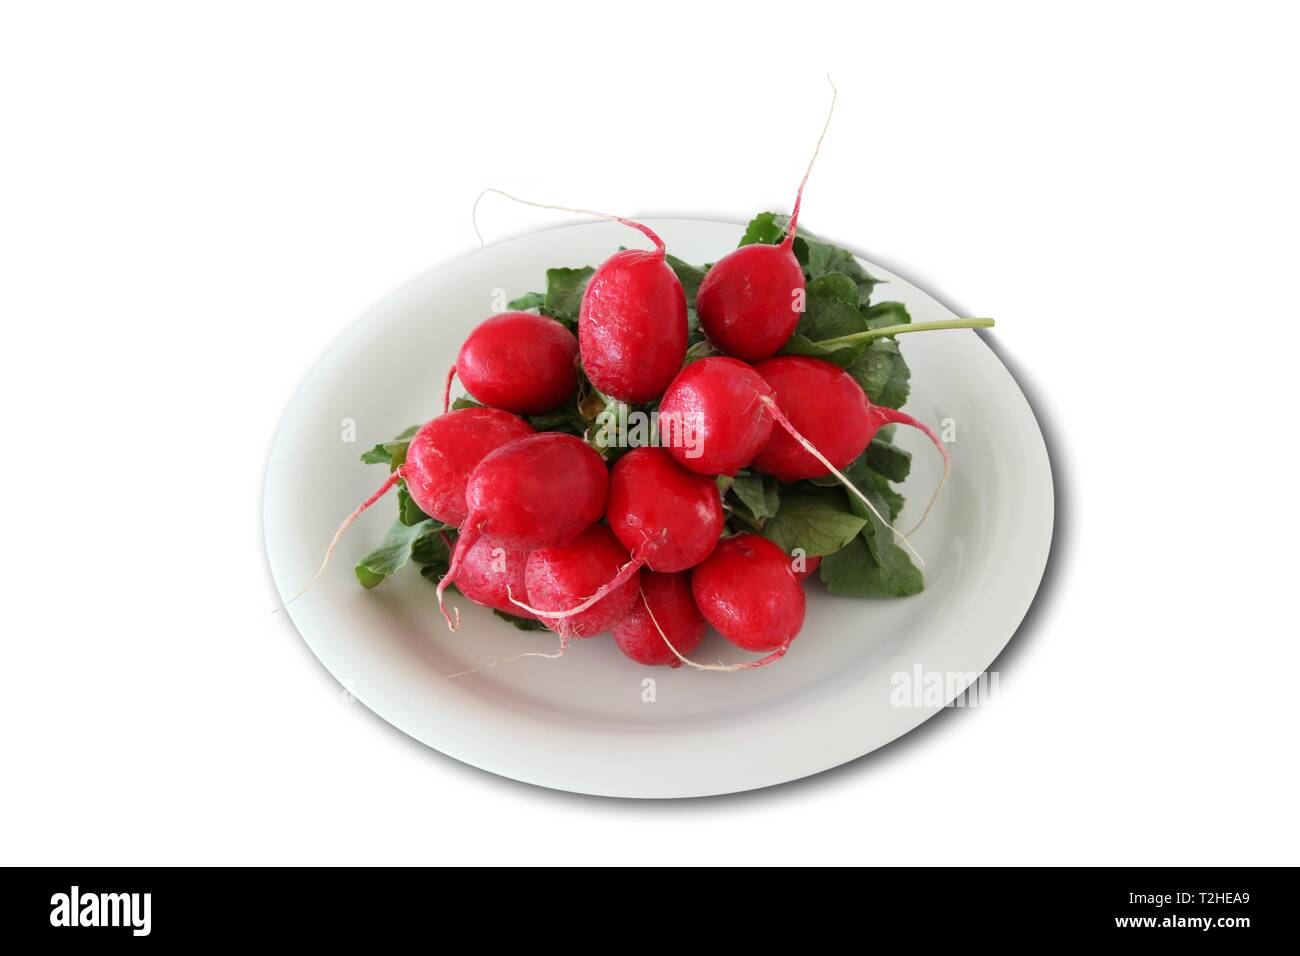 Radish on white plate, Freisteller, Germany Stock Photo